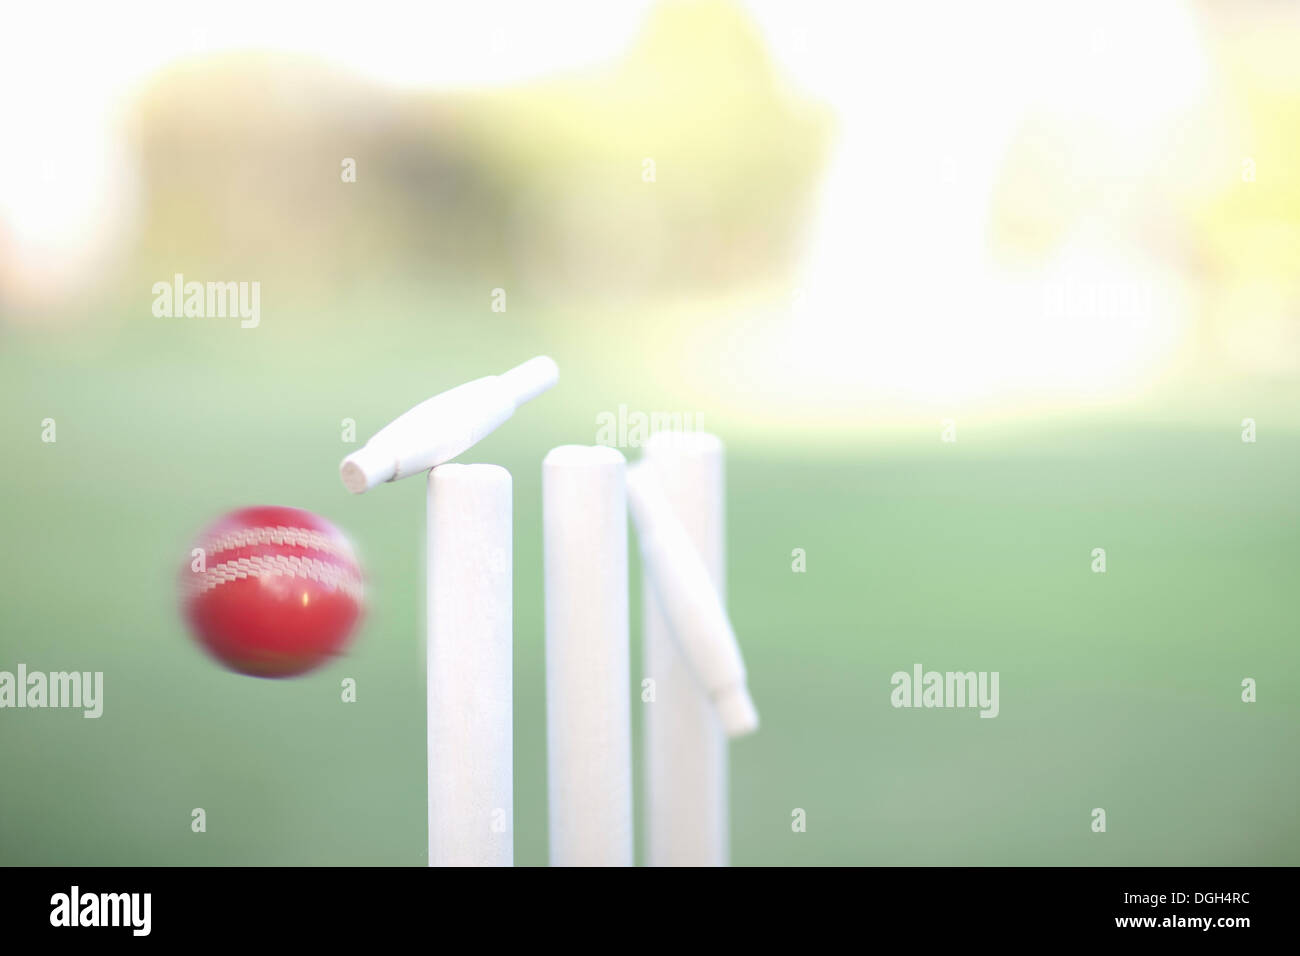 Cricket ball hitting cricket stumps, close up Stock Photo